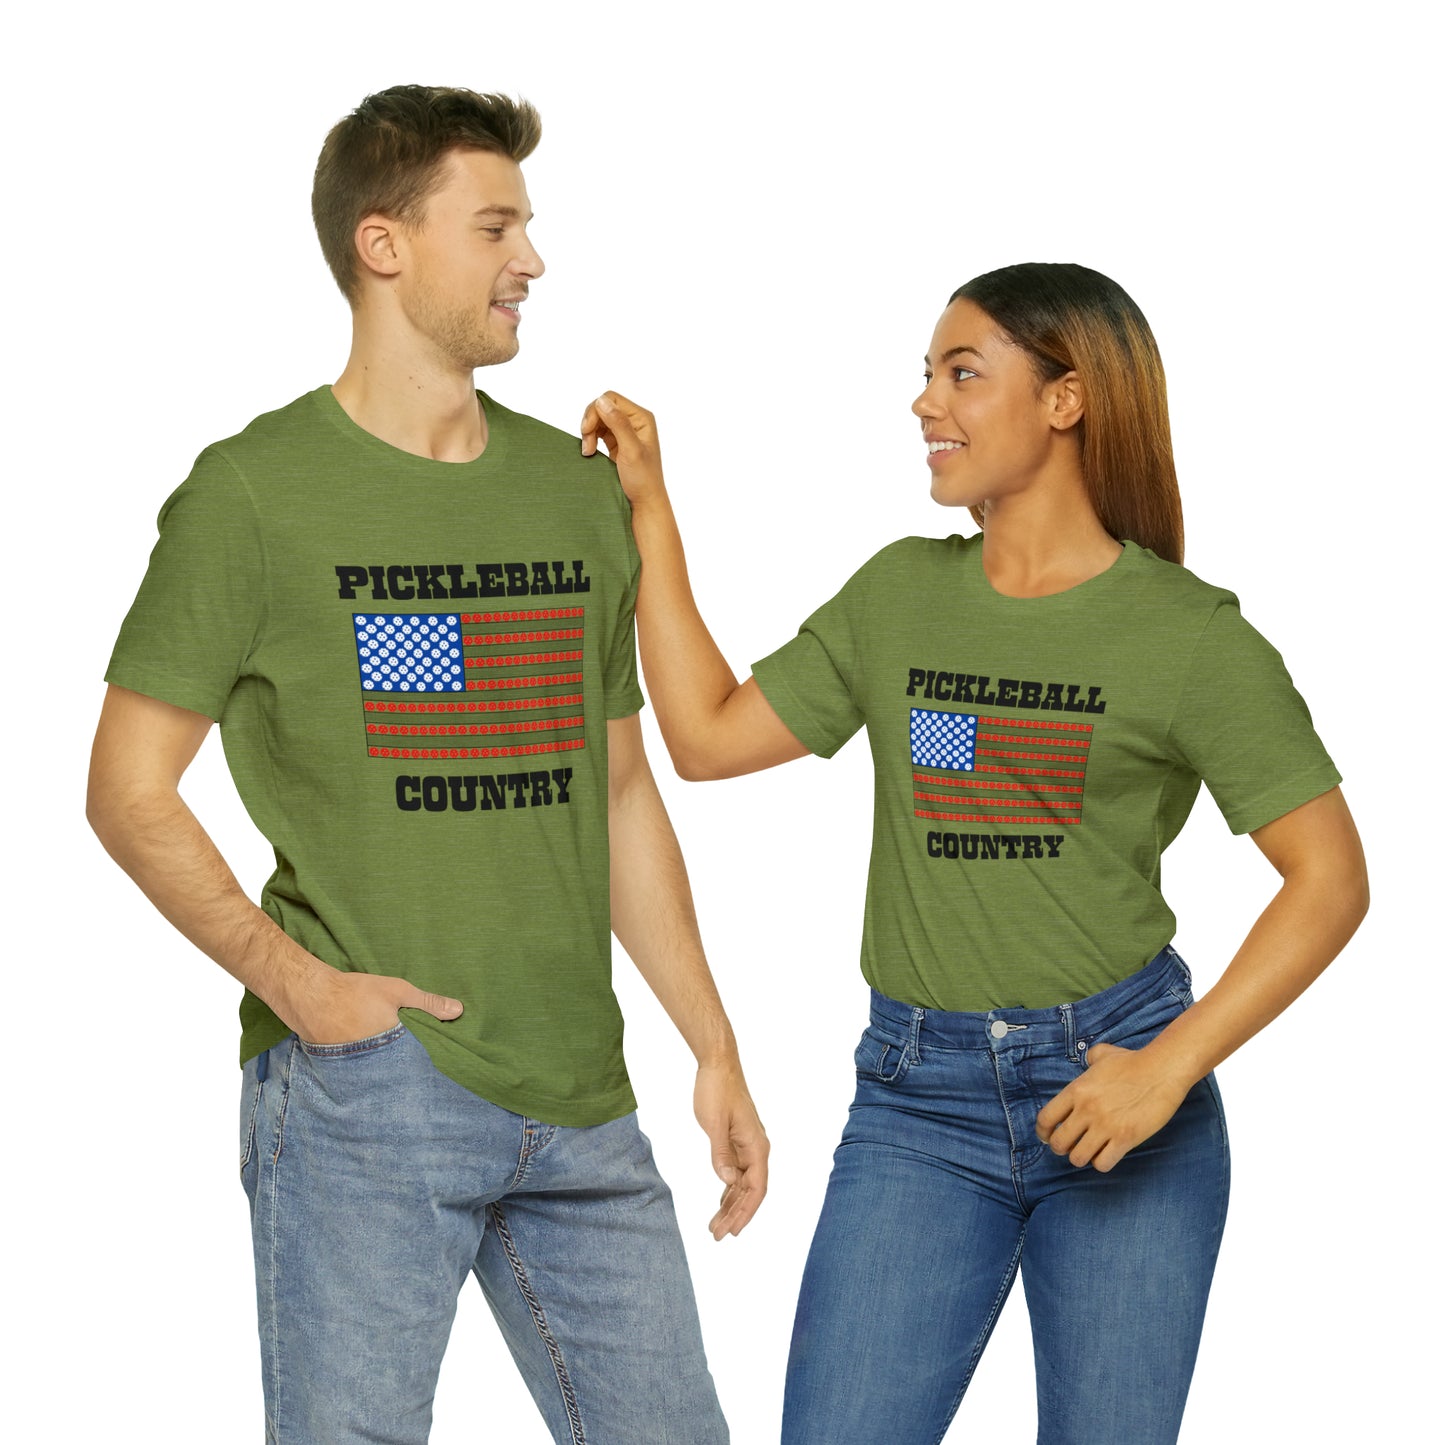 Unisex T-shirt Pickleball Country